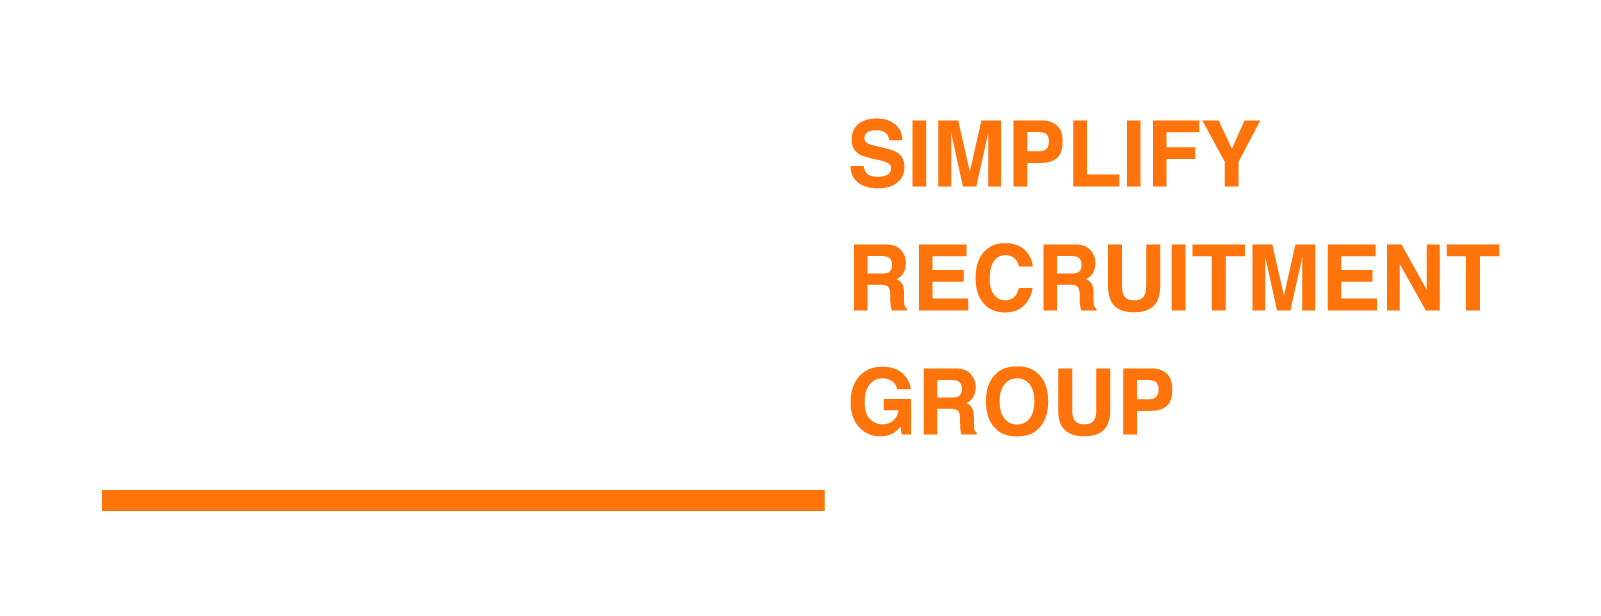 Simplify Recruitment Group